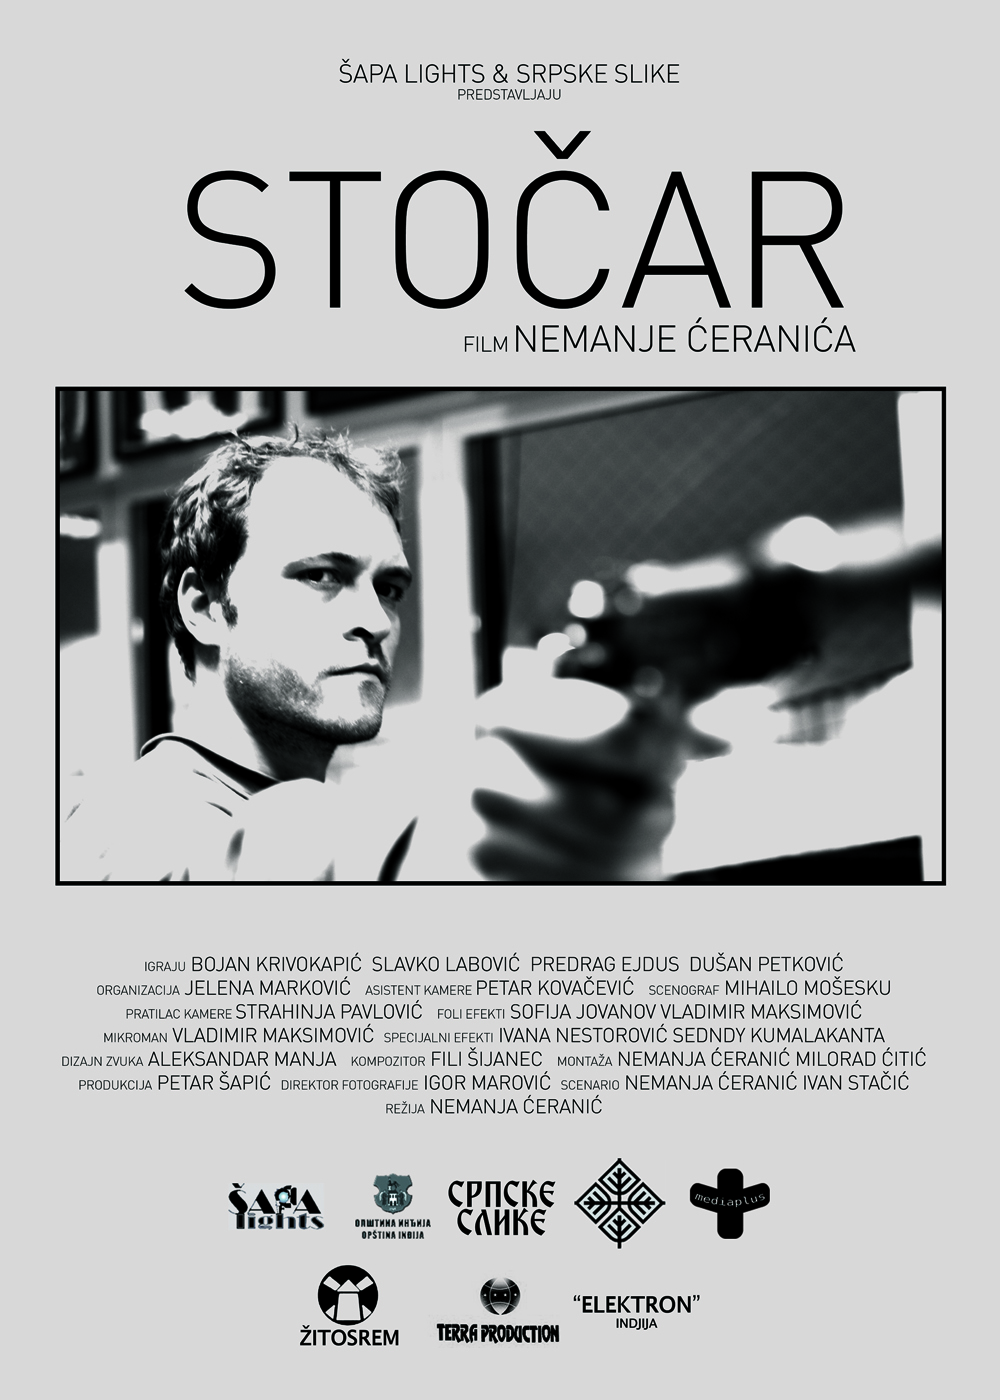 Stocar (2013) Screenshot 3 